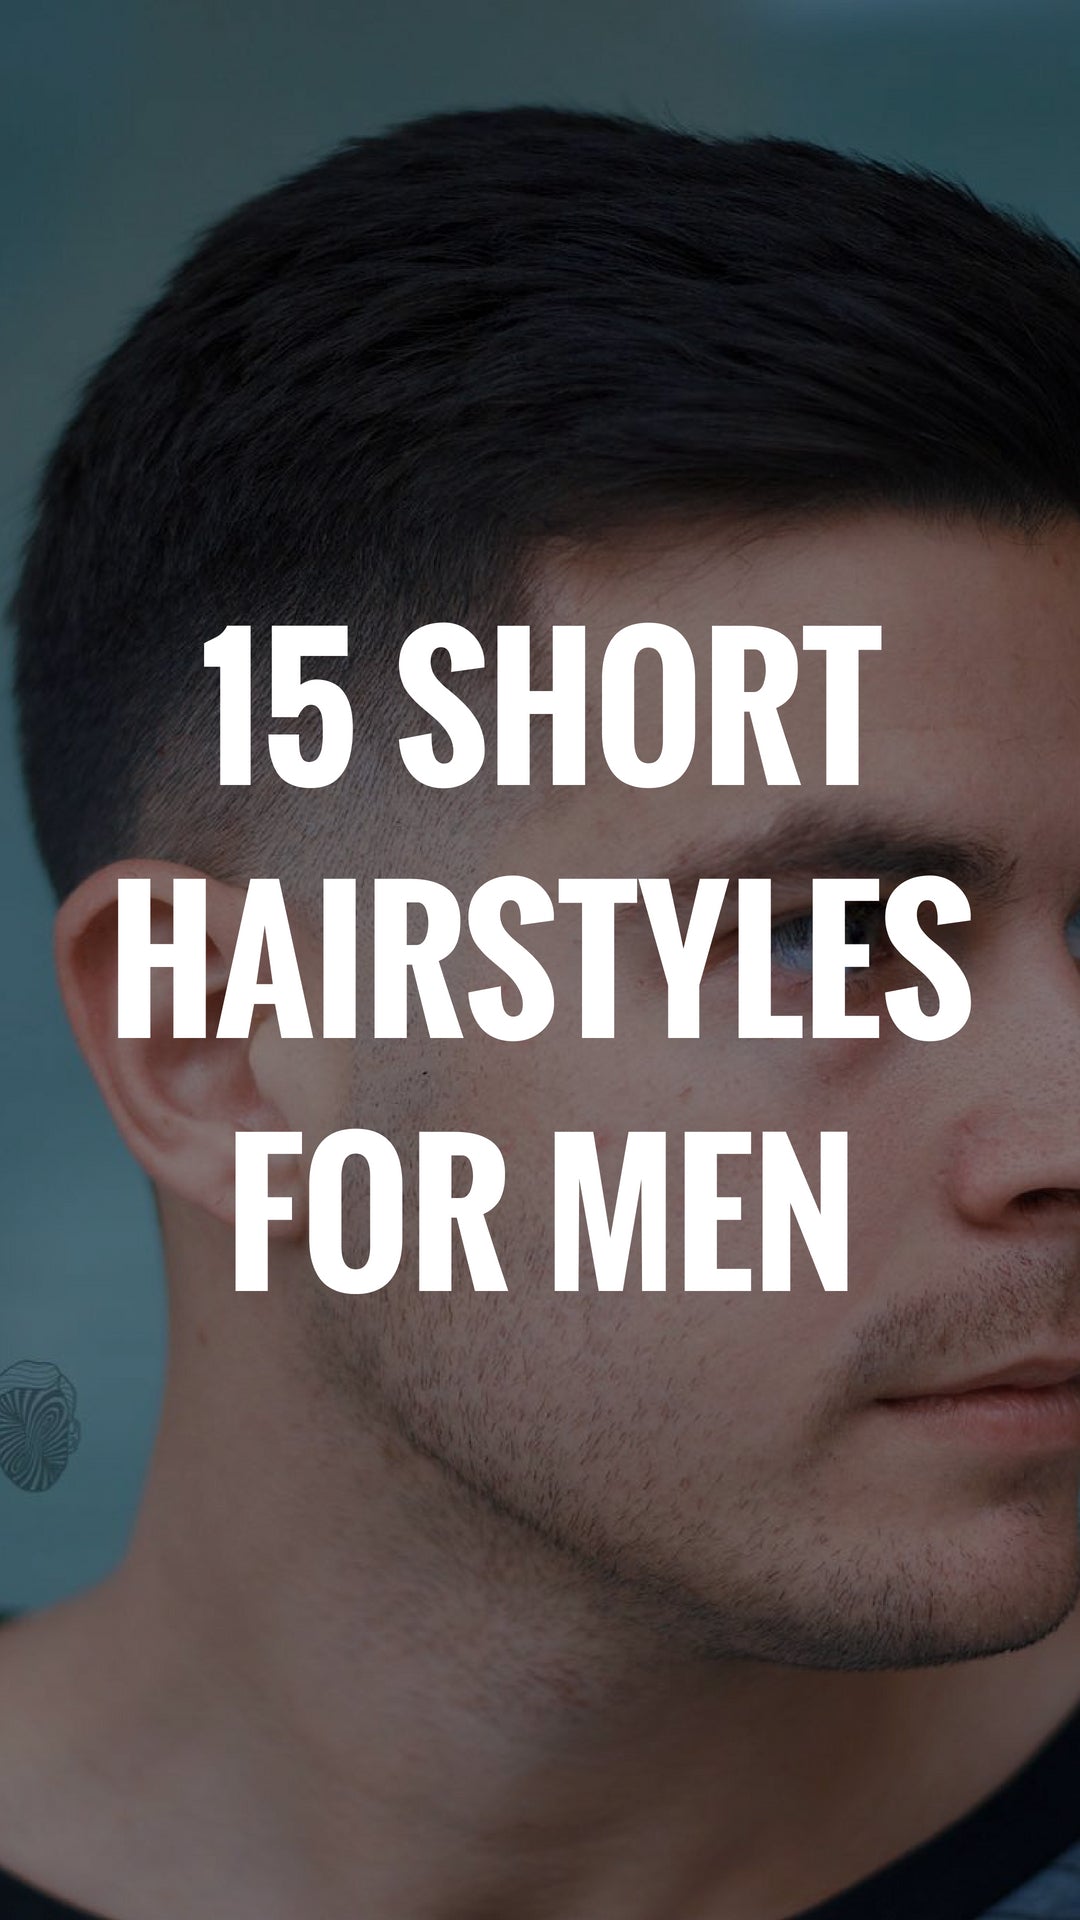 15 Short Hairstyles For Men